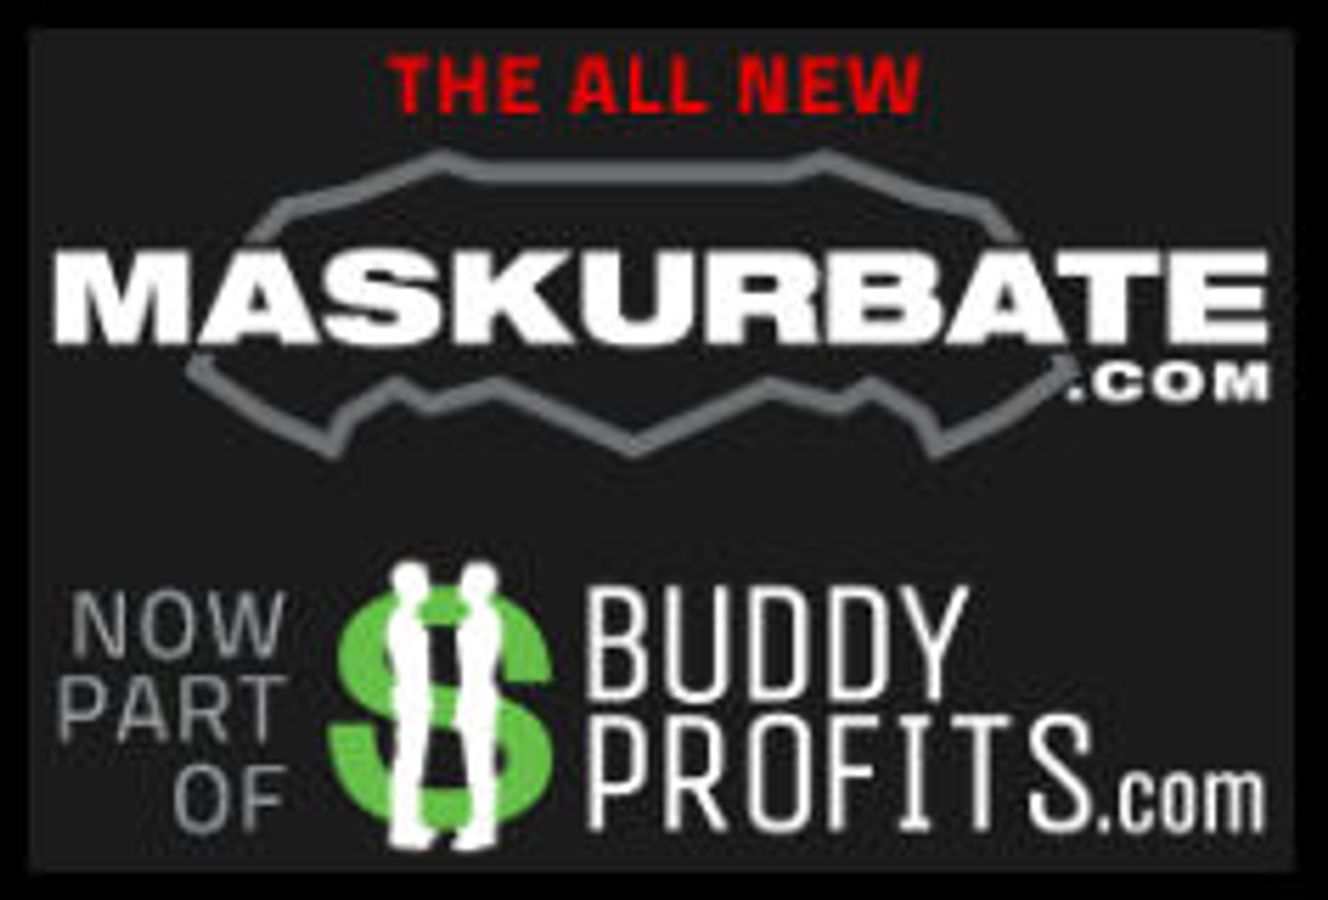 Maskurbate.com/Buddy Profits